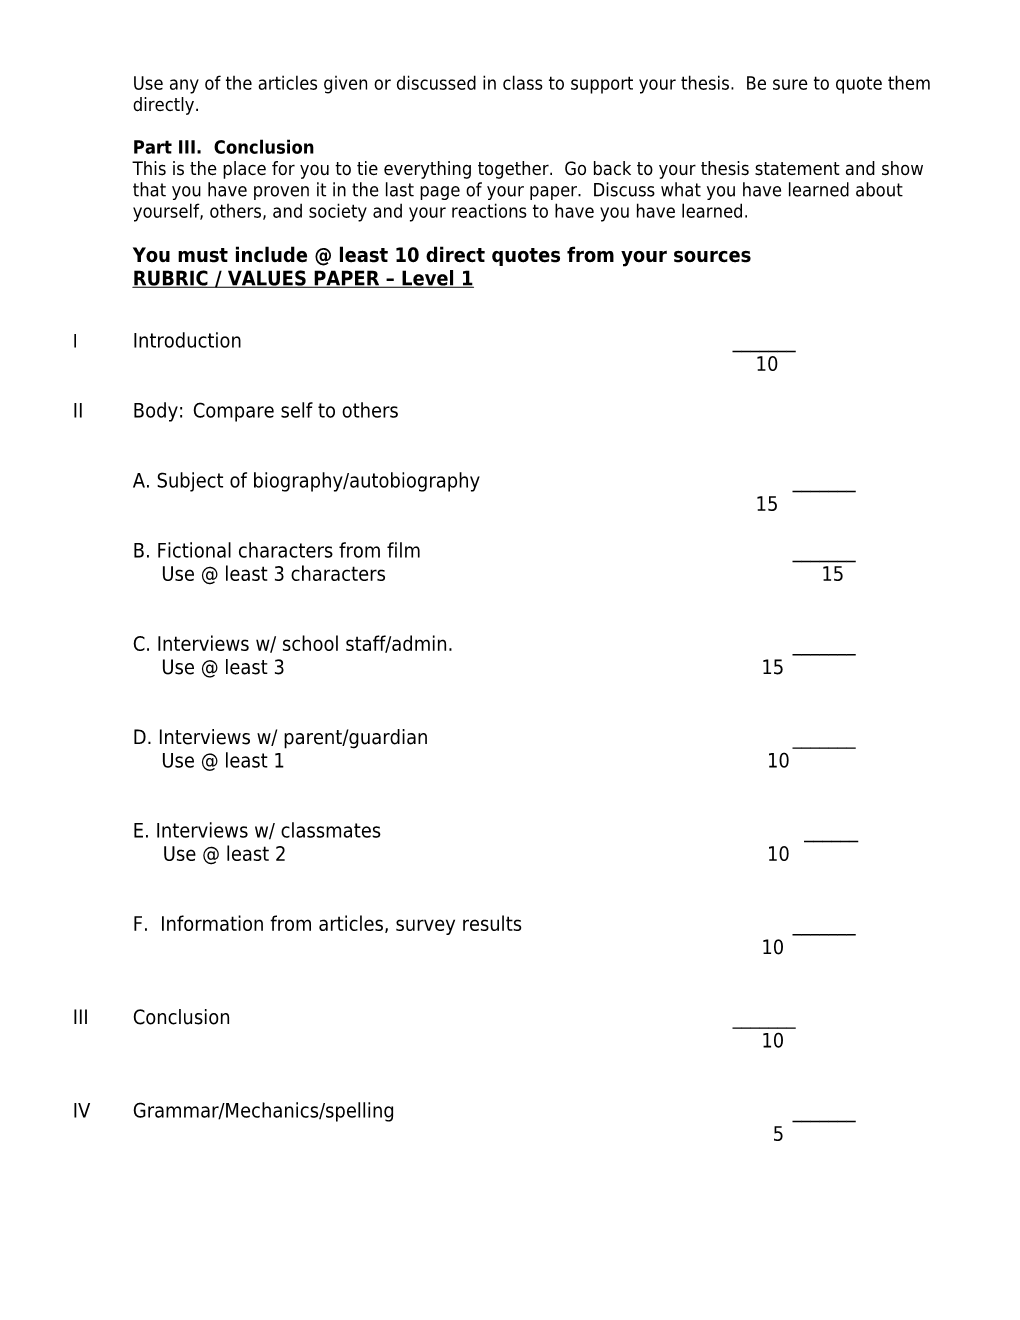 Scoring Rubric for Values Paper / Senior English / Ms